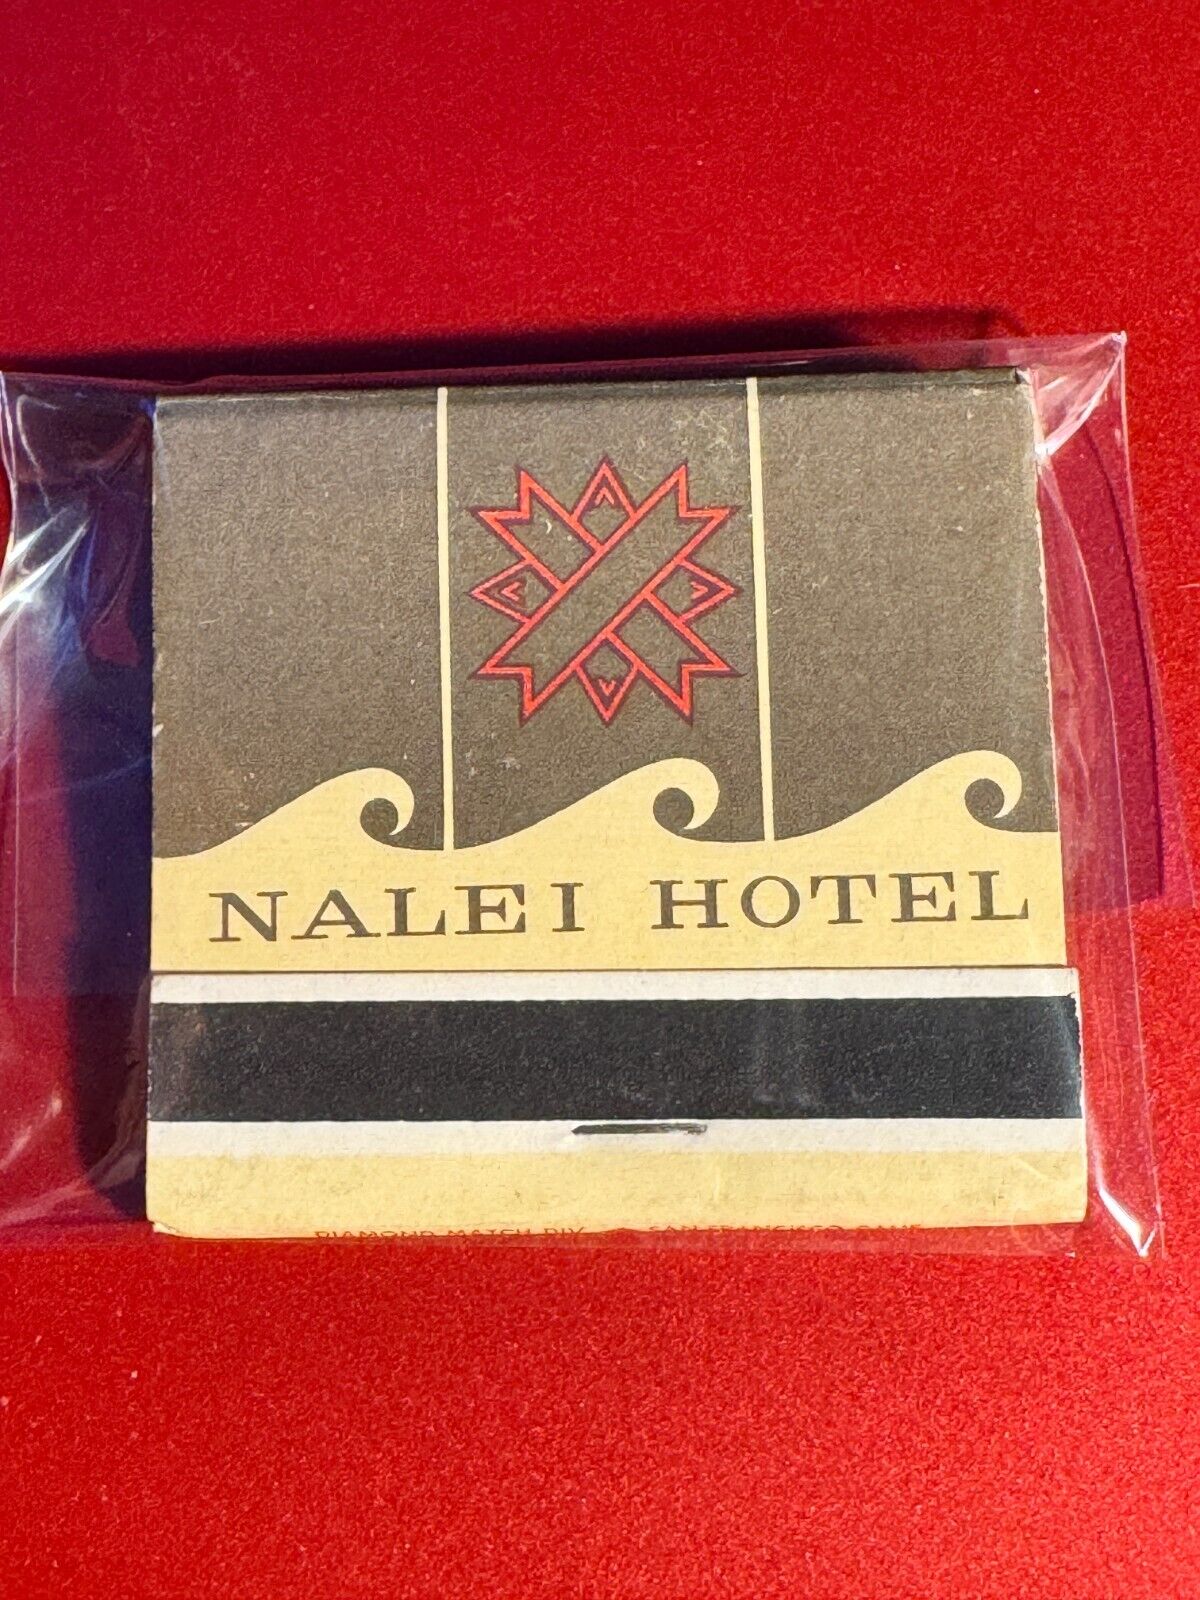 MATCHBOOK - NALEI HOTEL - HILO, HAWAII - UNSTRUCK